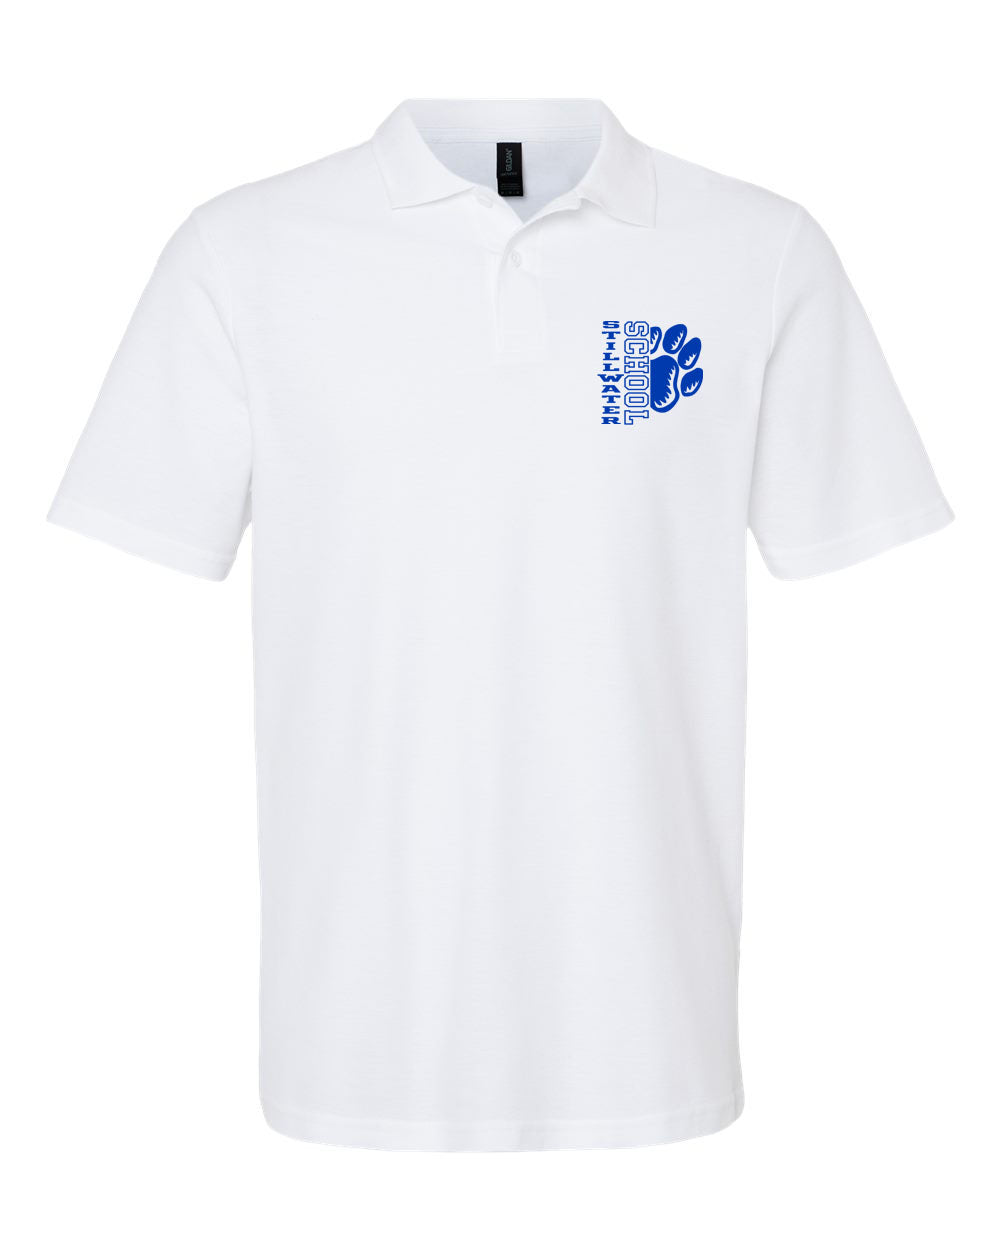 Stillwater Design 17 Polo T-Shirt